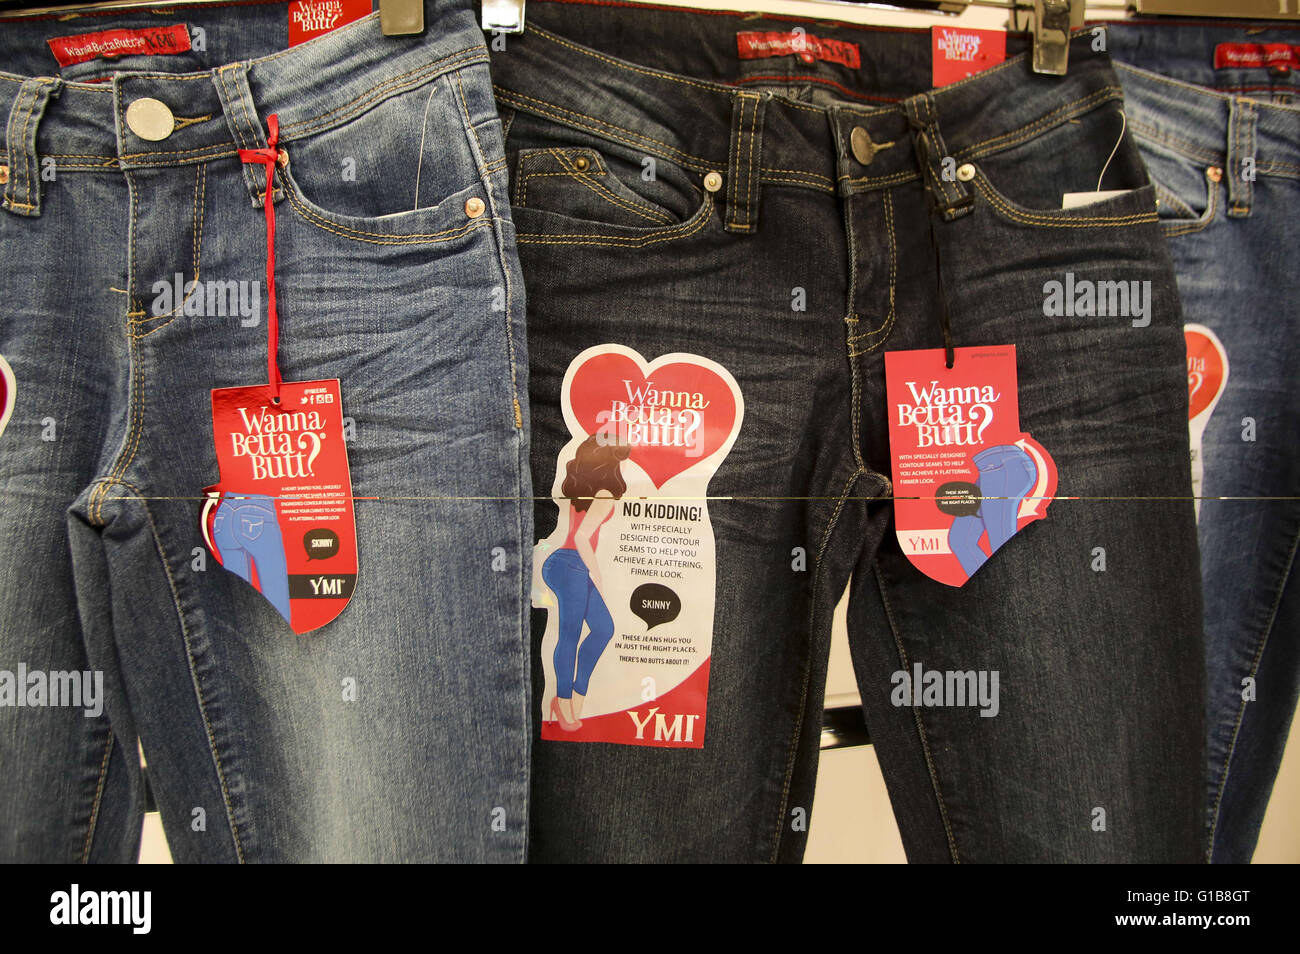 https://c8.alamy.com/comp/G1B8GT/los-angeles-california-usa-6th-apr-2016-ymi-jeans-new-line-under-the-G1B8GT.jpg